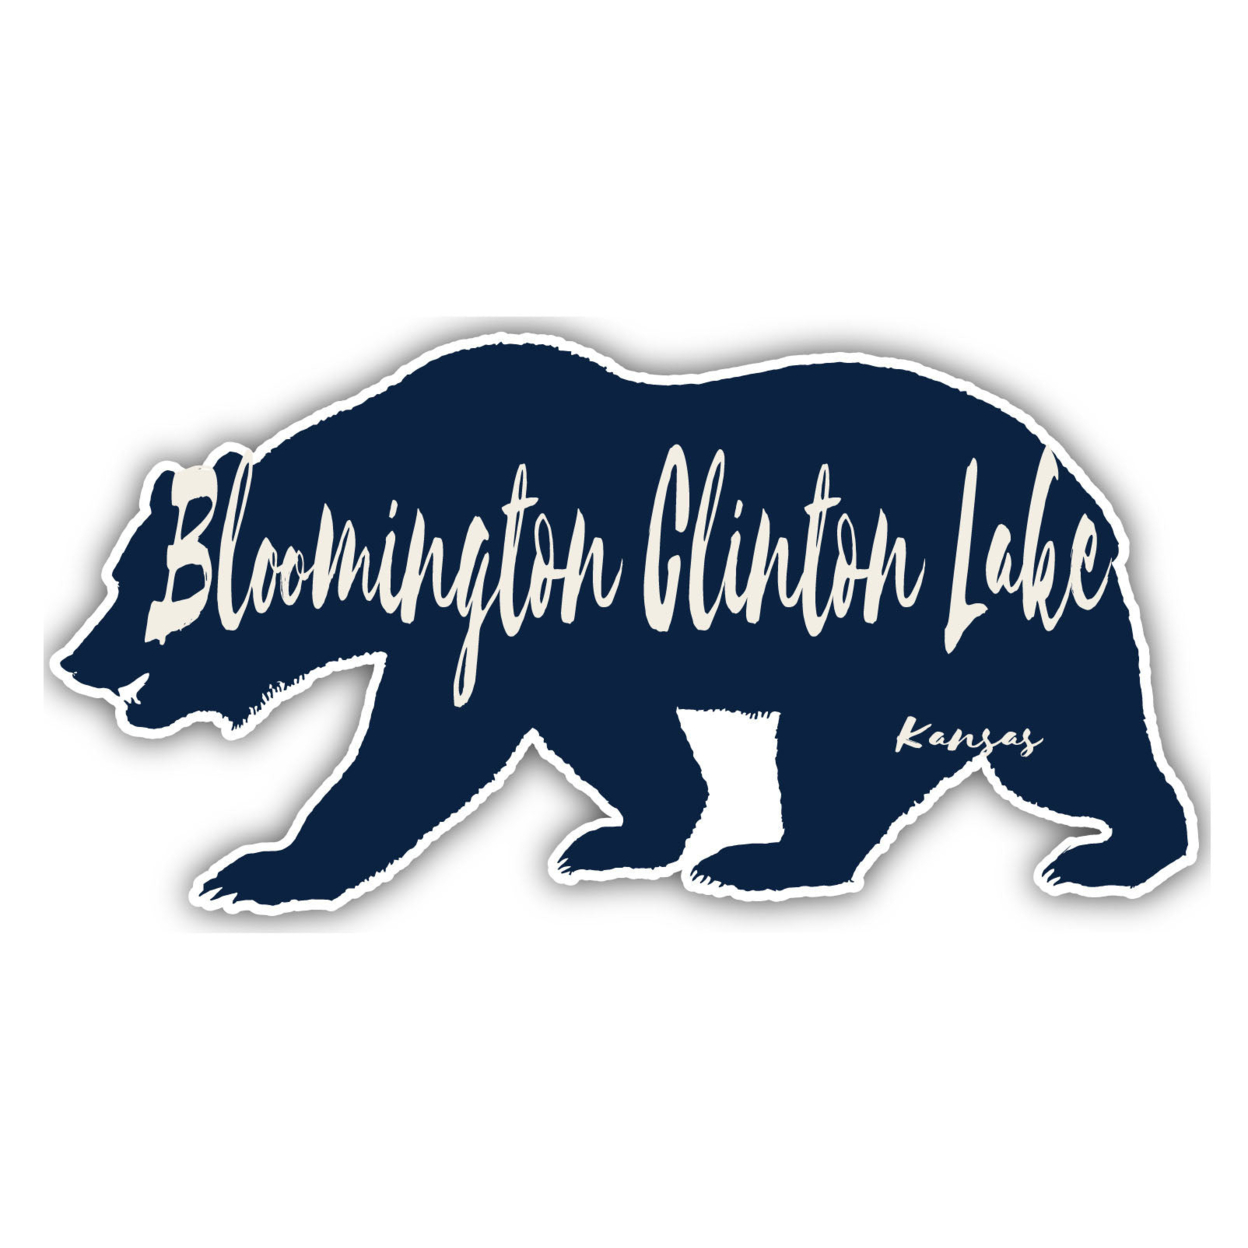 Bloomington Clinton Lake Kansas Souvenir Decorative Stickers (Choose Theme And Size) - 4-Pack, 2-Inch, Bear